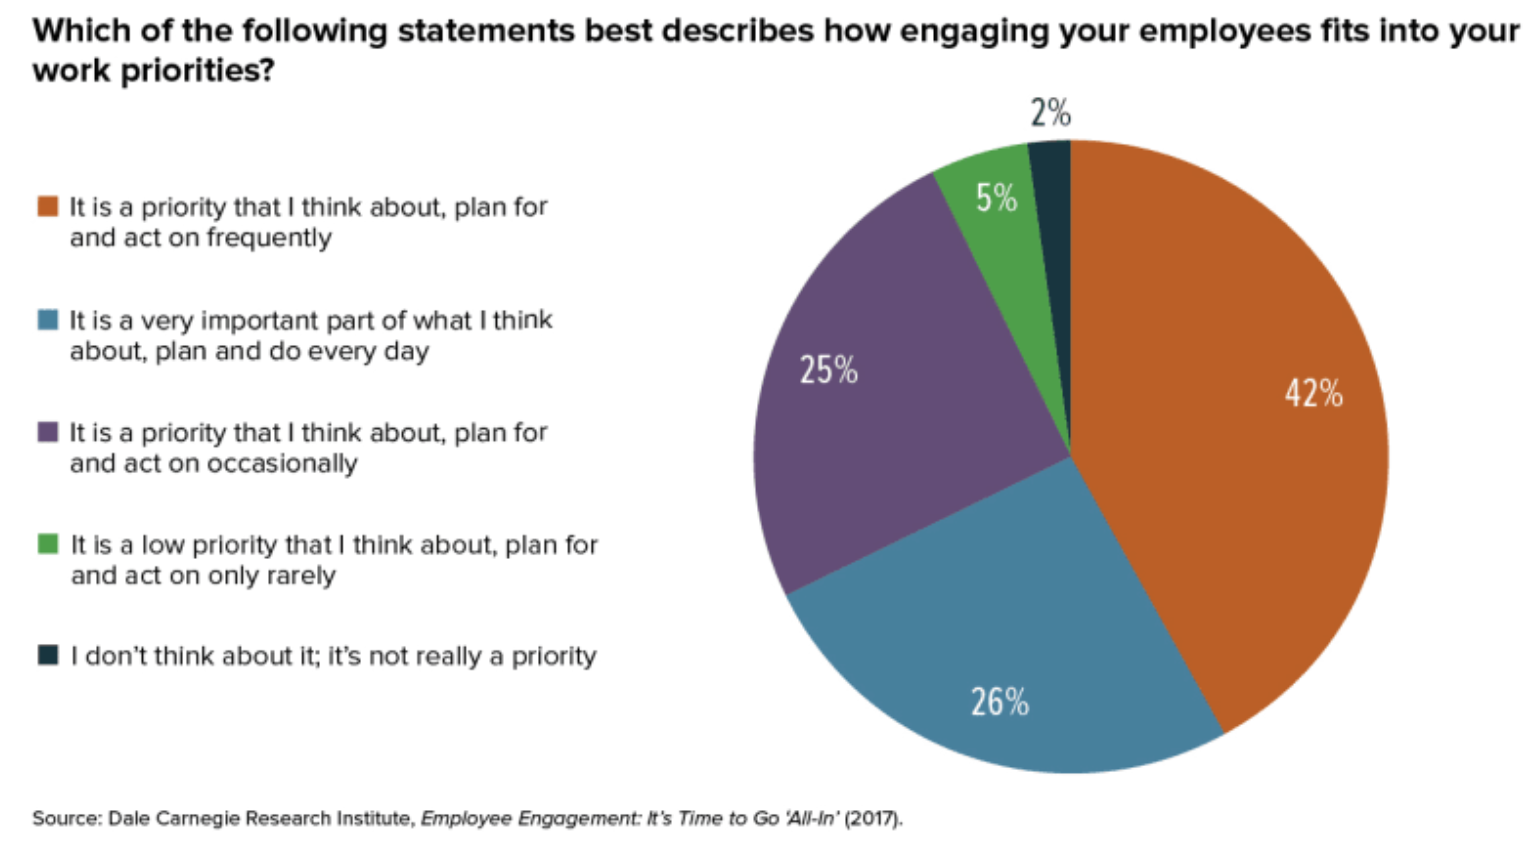 Prioitizing engaging employees